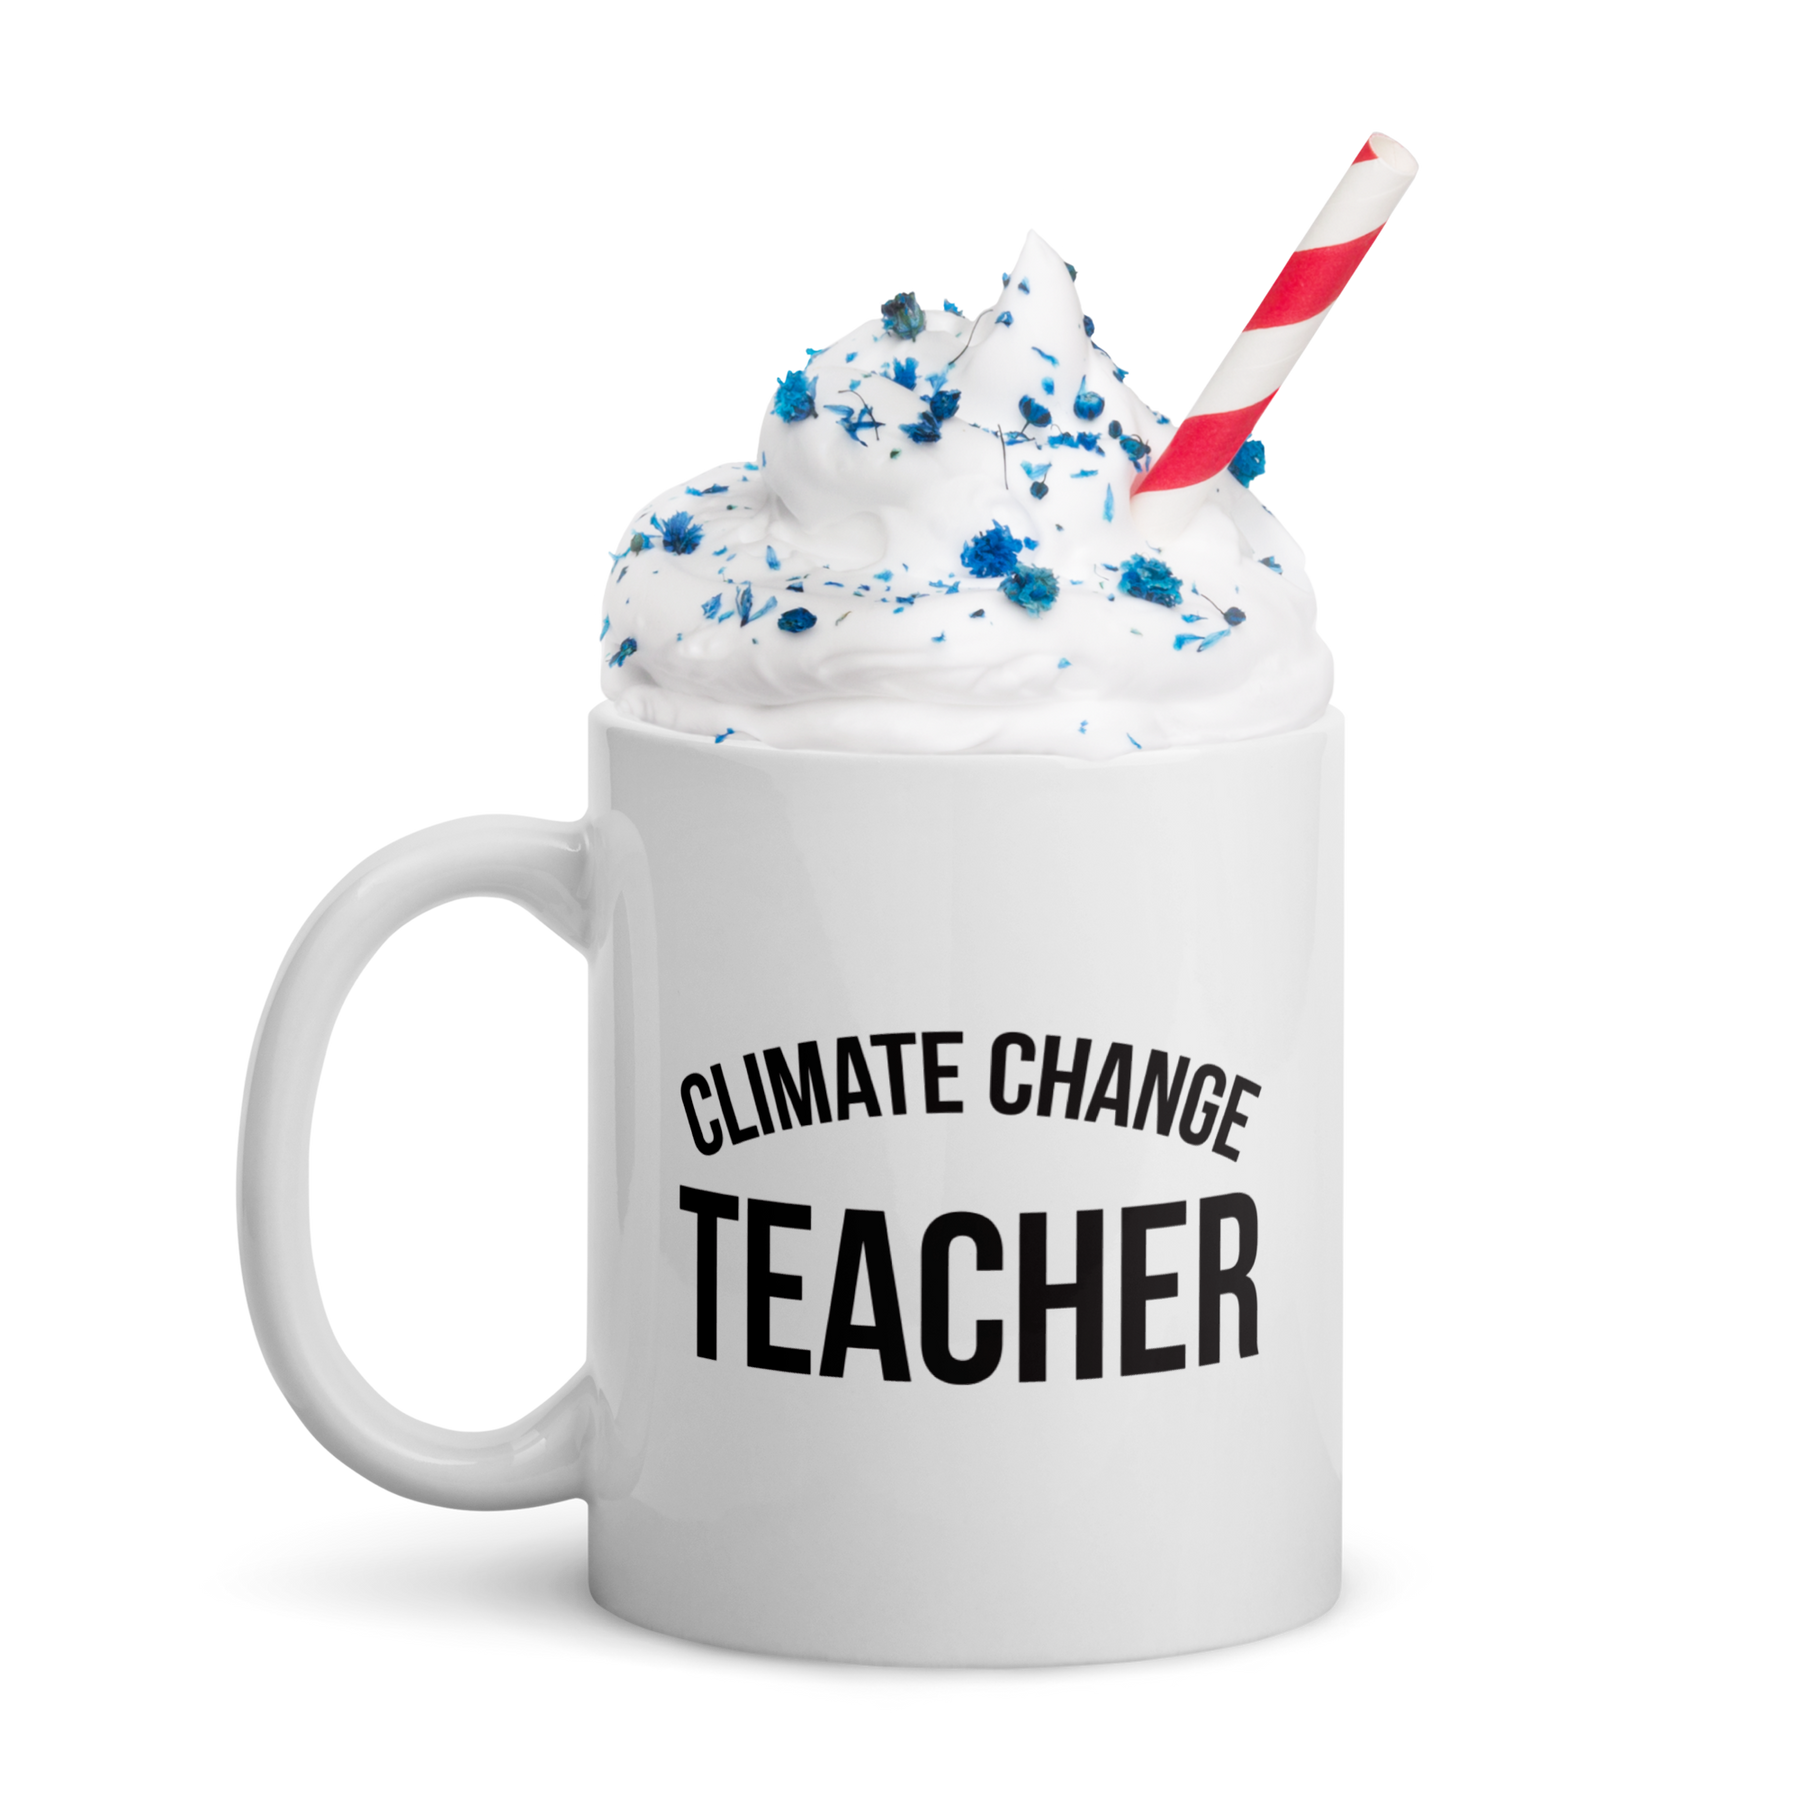 CLIMATE CHANGE TEACHER White glossy mug